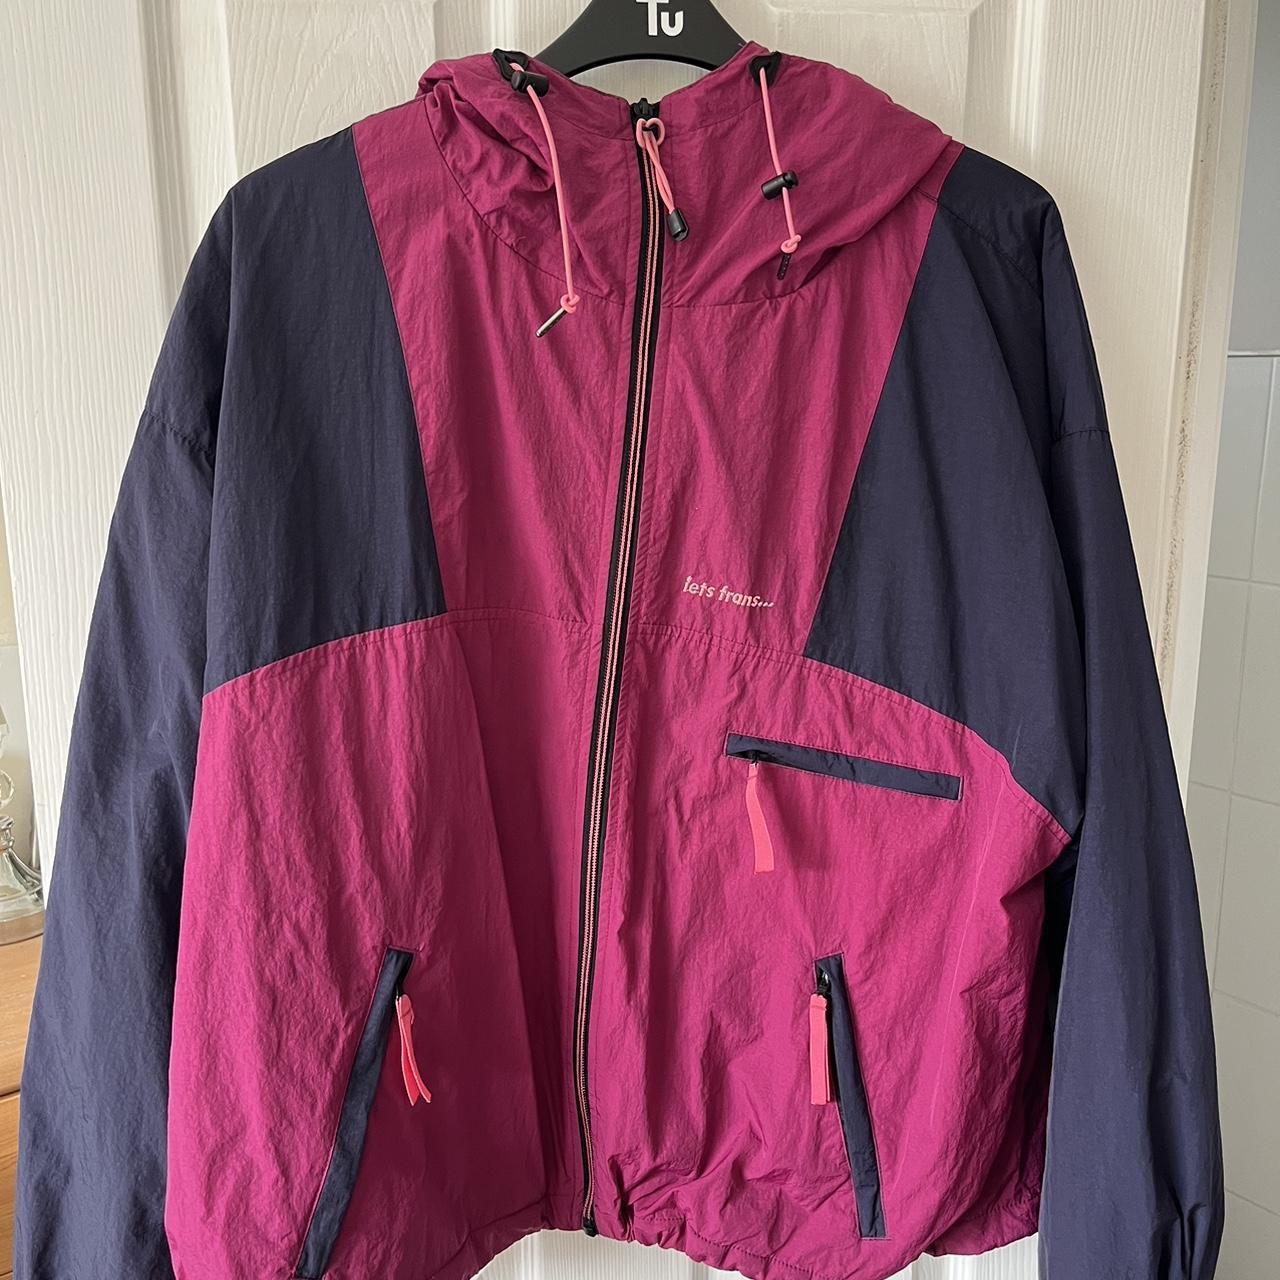 Urban outfitters iets frans fleece lined raincoat UK... - Depop